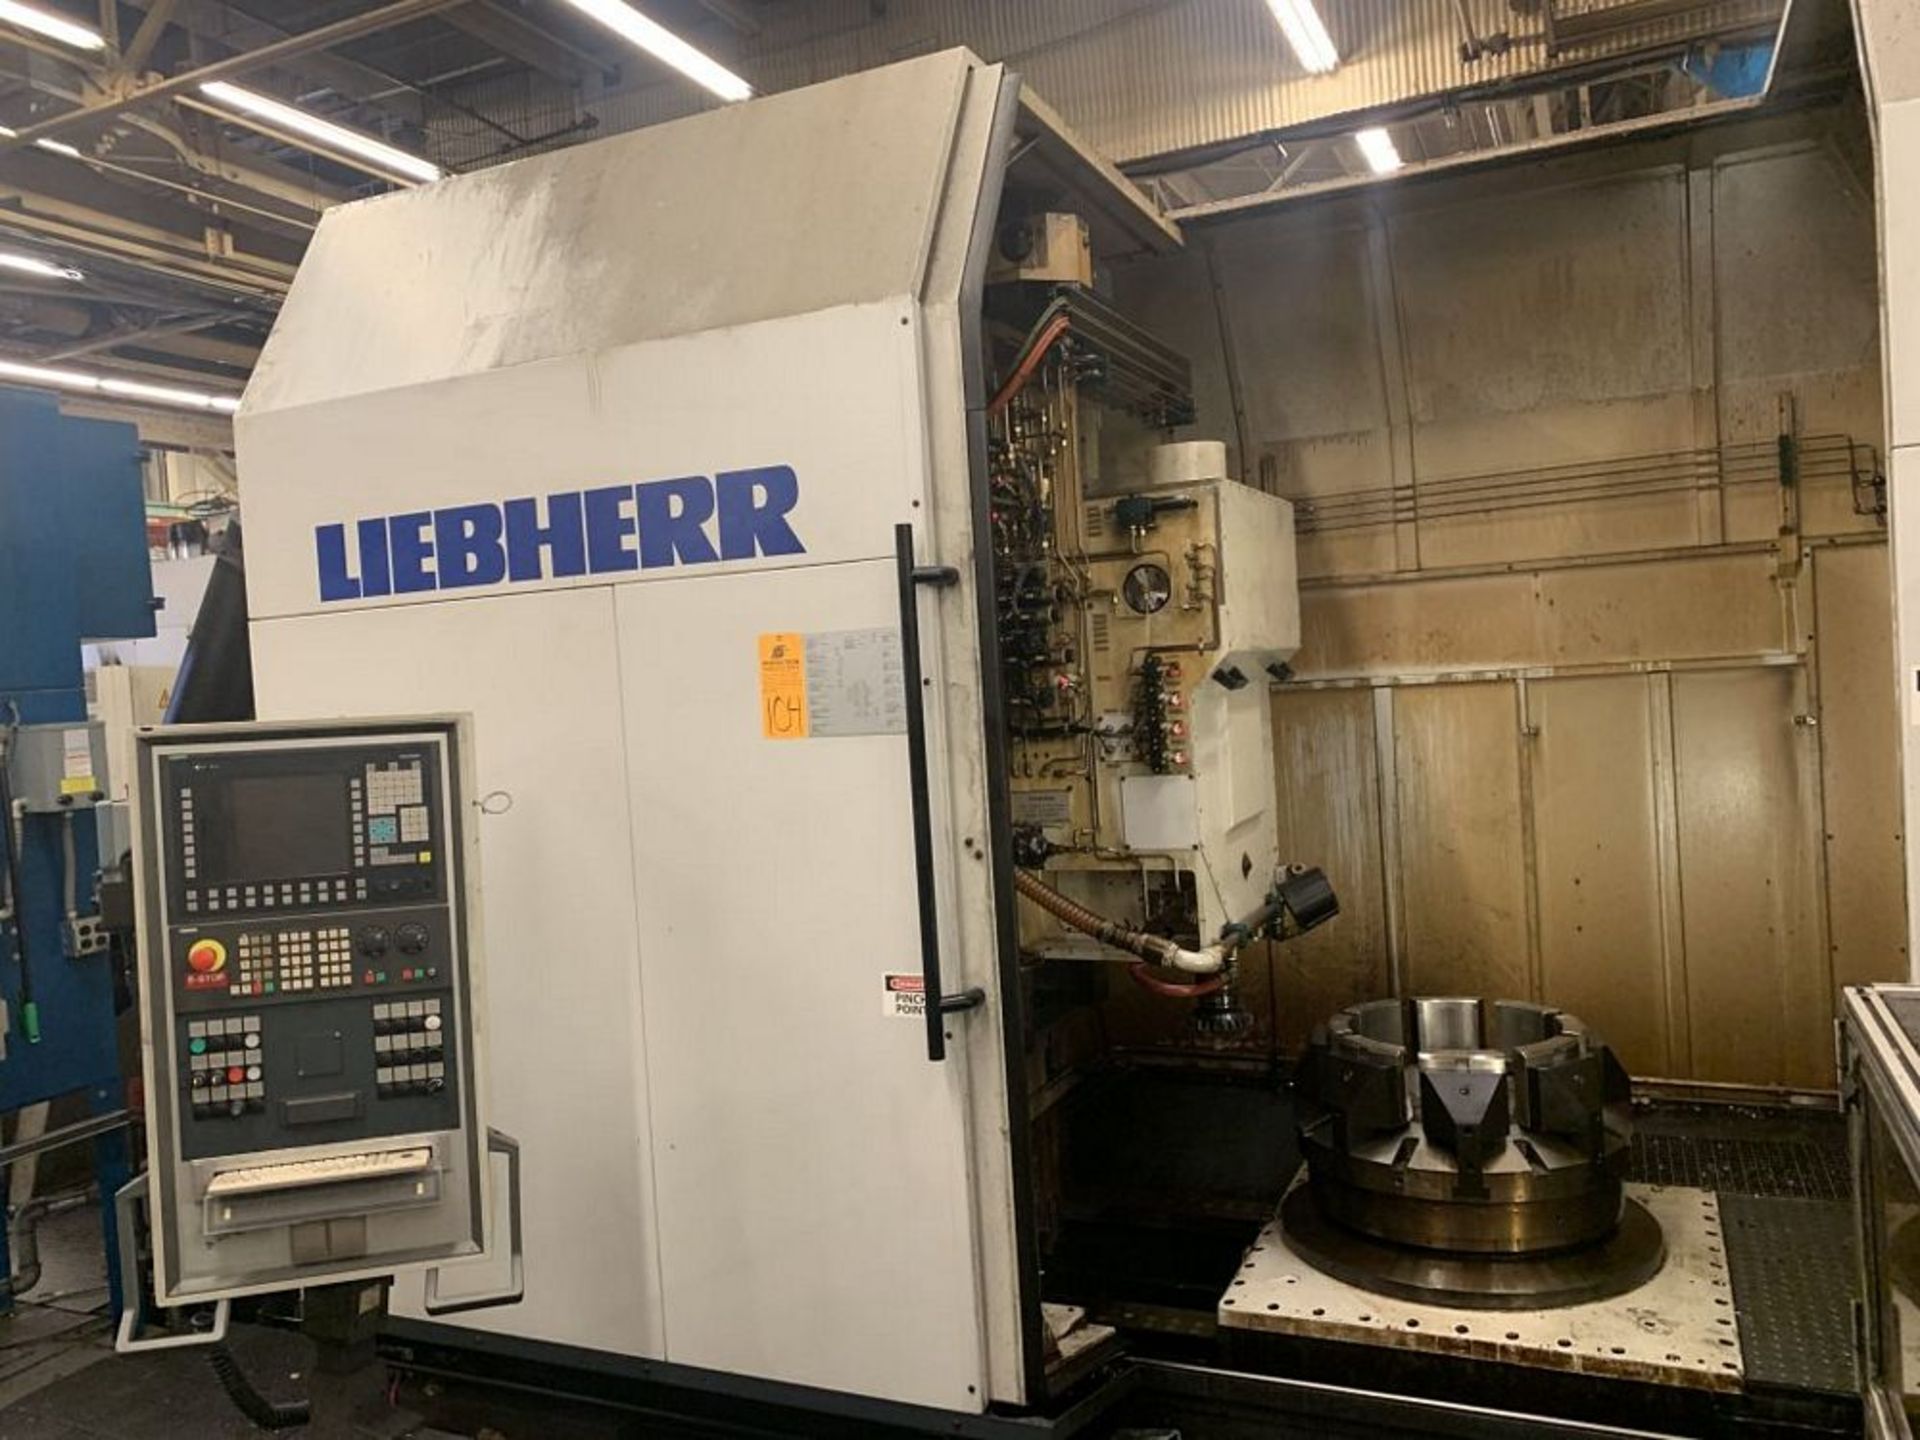 2006 LIEBHERR LFS 800 CNC Gear Shaper, s/n 2053, Siemens Sinumerik CNC Control | M28522 (Location